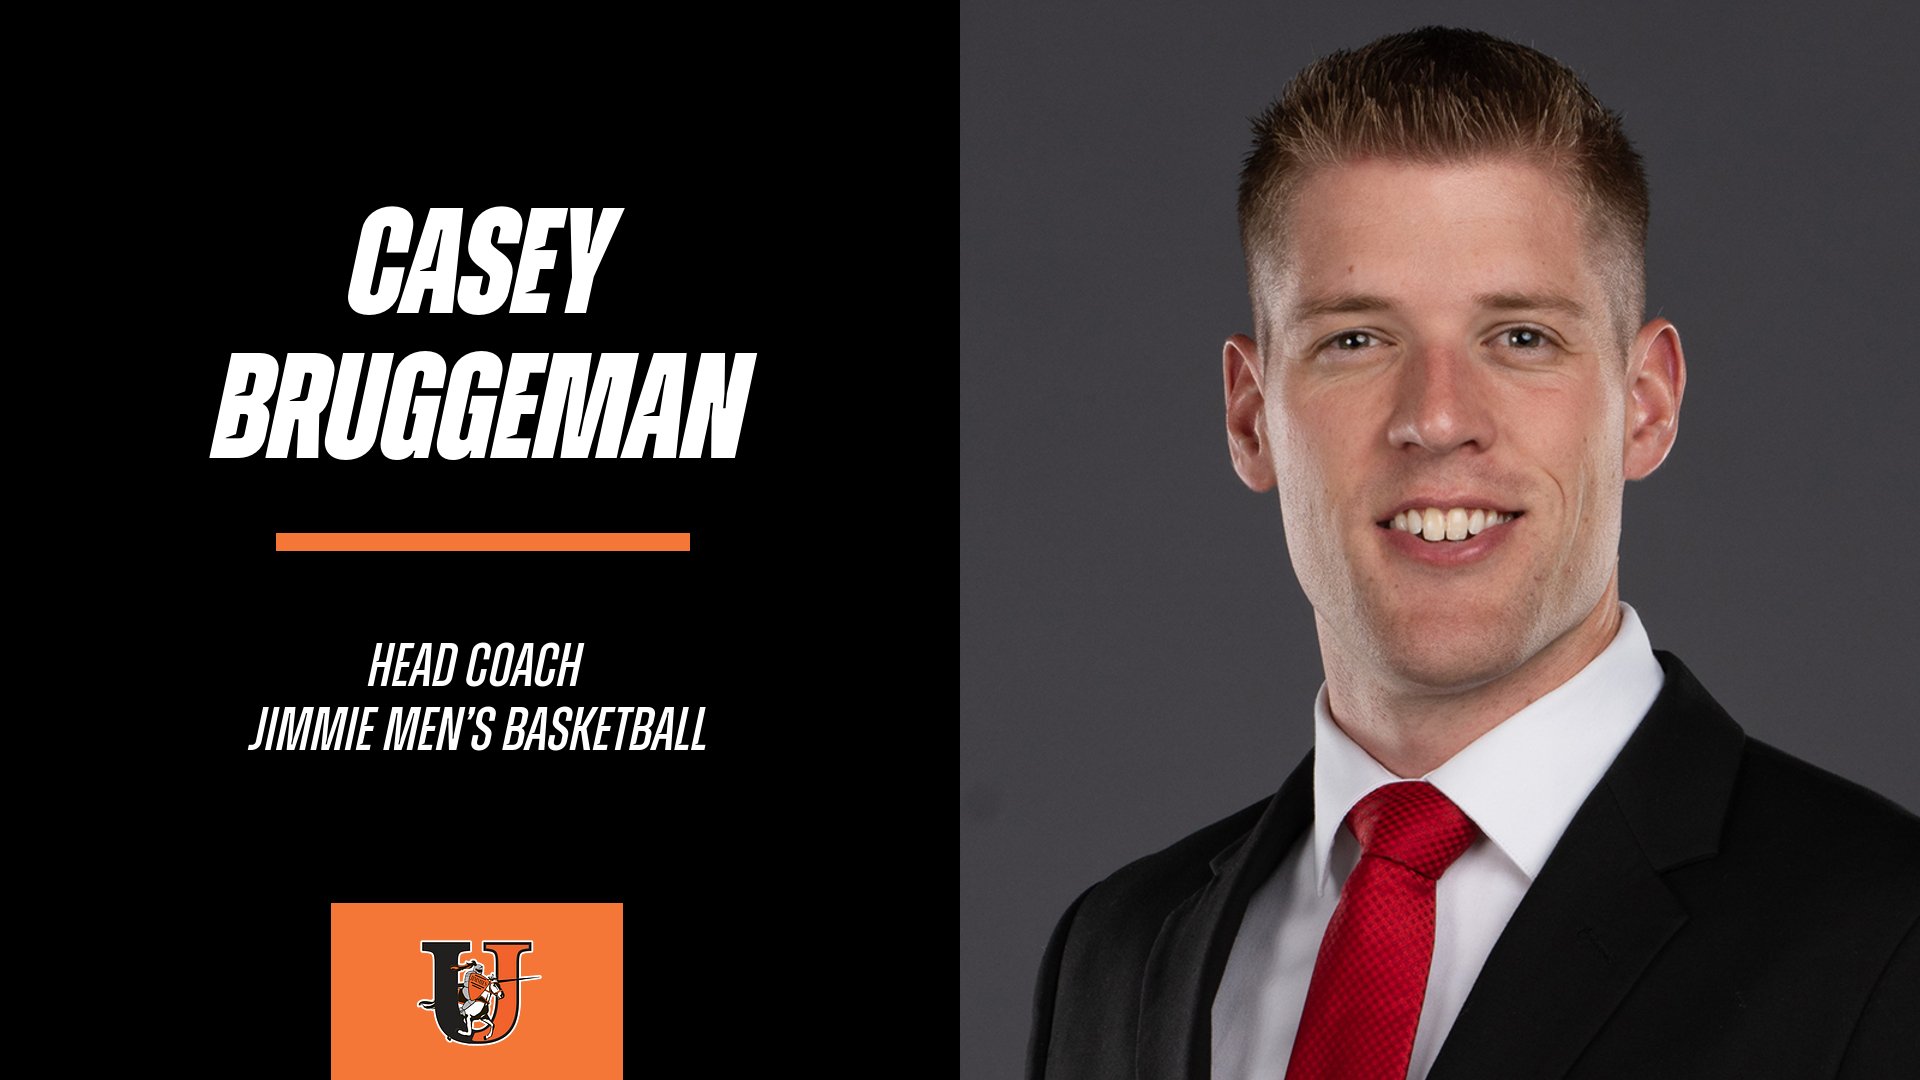 Casey Bruggeman hired as head coach of Jimmie men's basketball